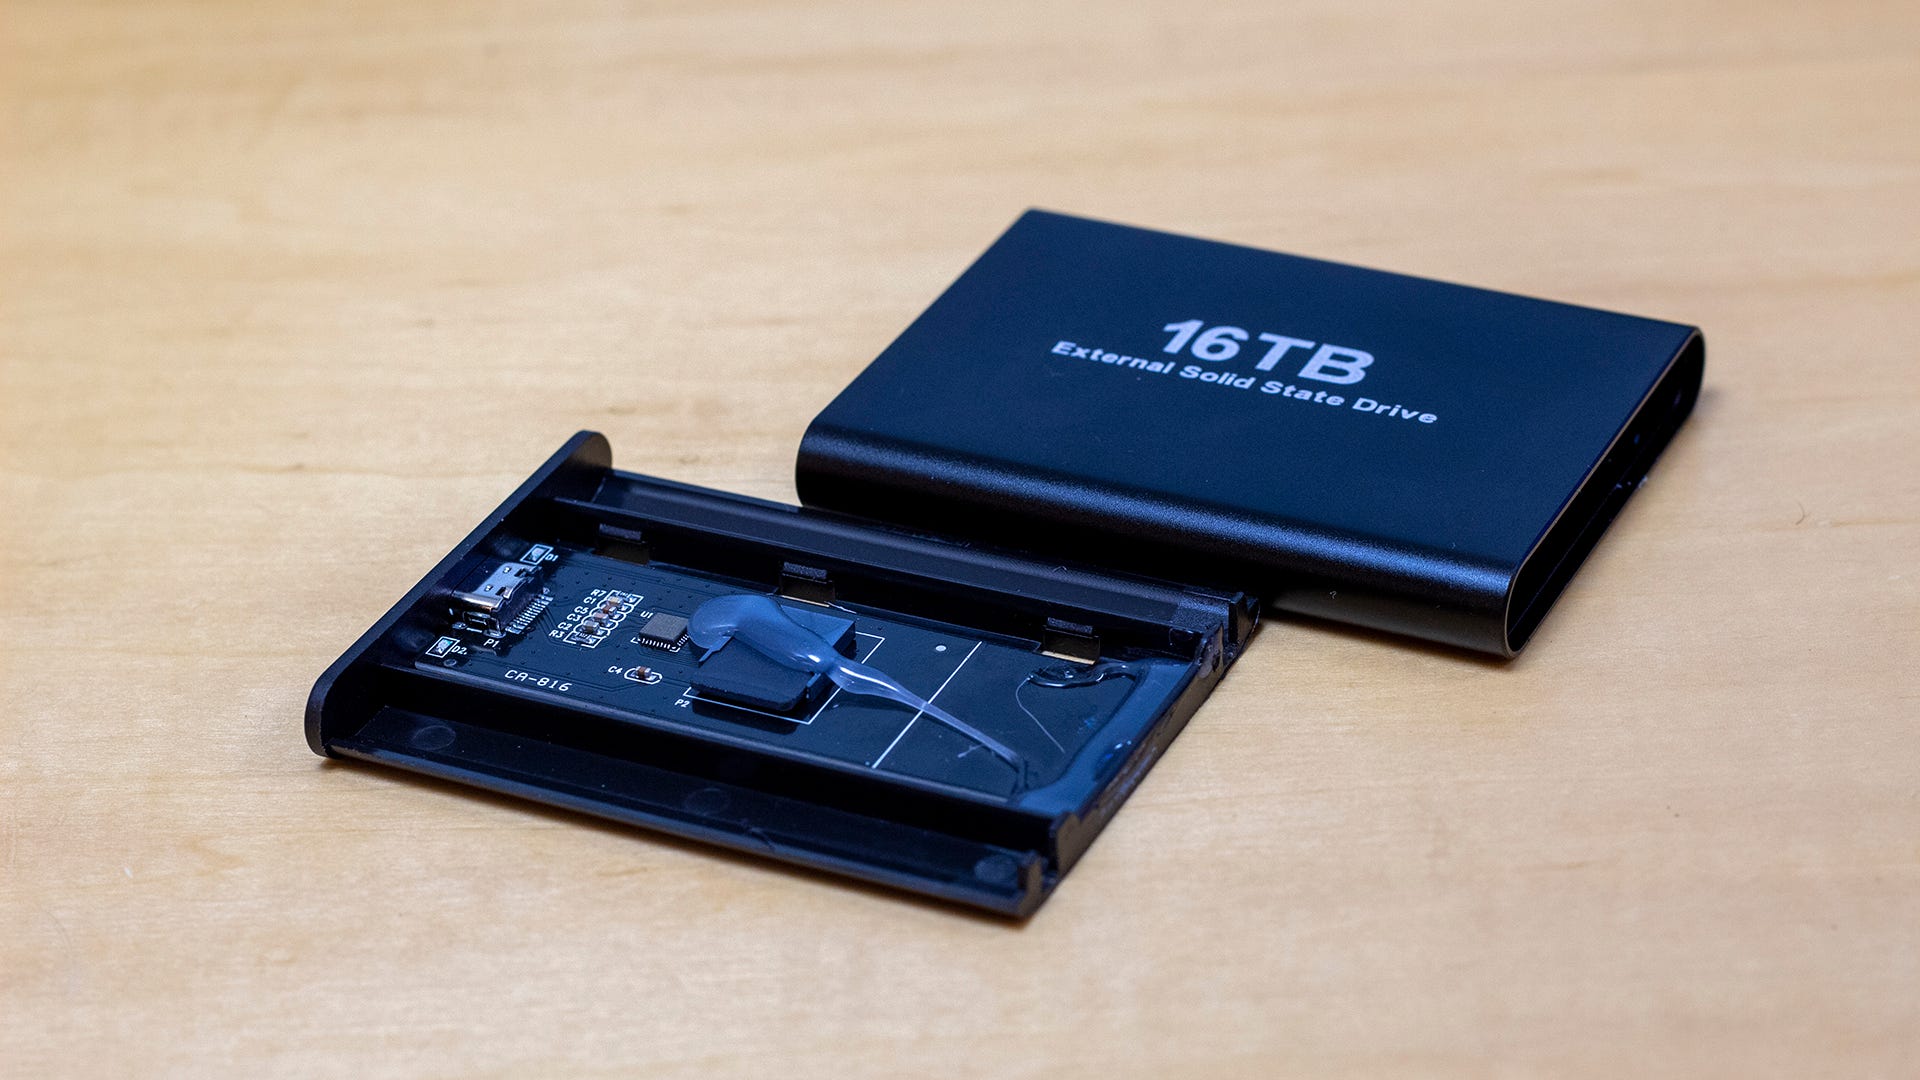 A torn apart hard drive revealing a micro SD card inside